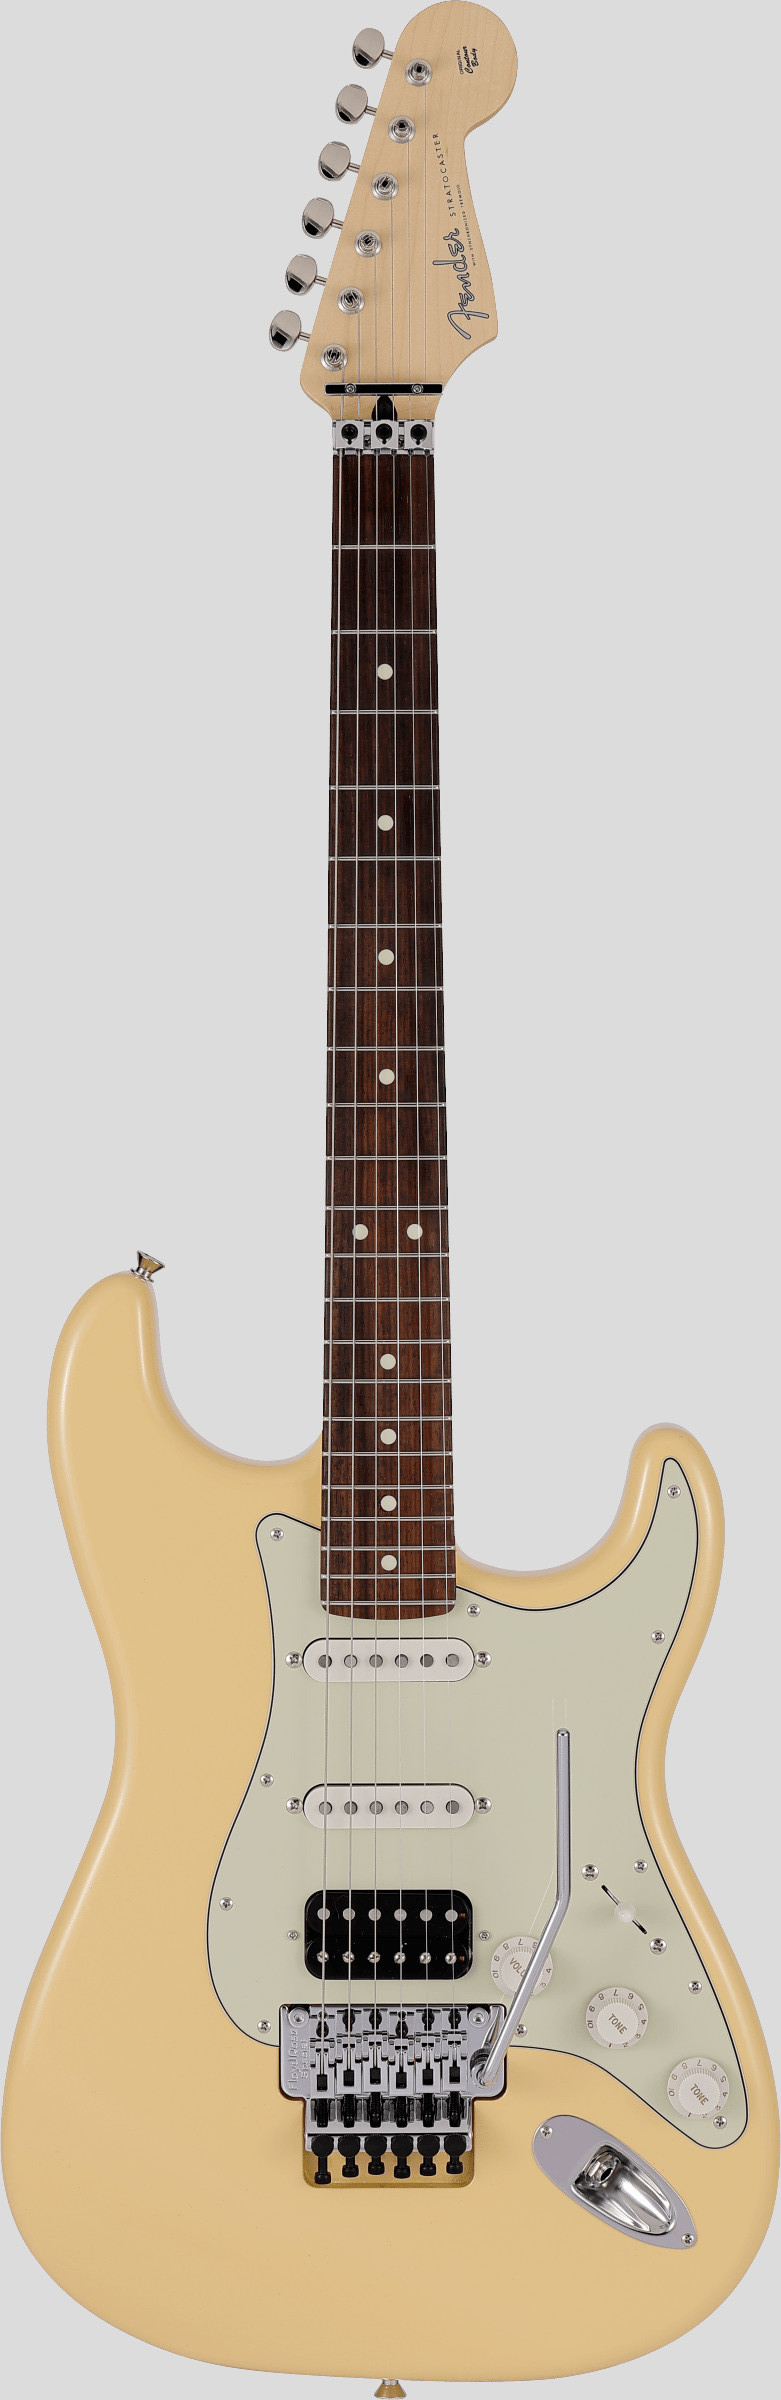 Fender Limited Edition Stratocaster Floyd Rose Vintage White 1